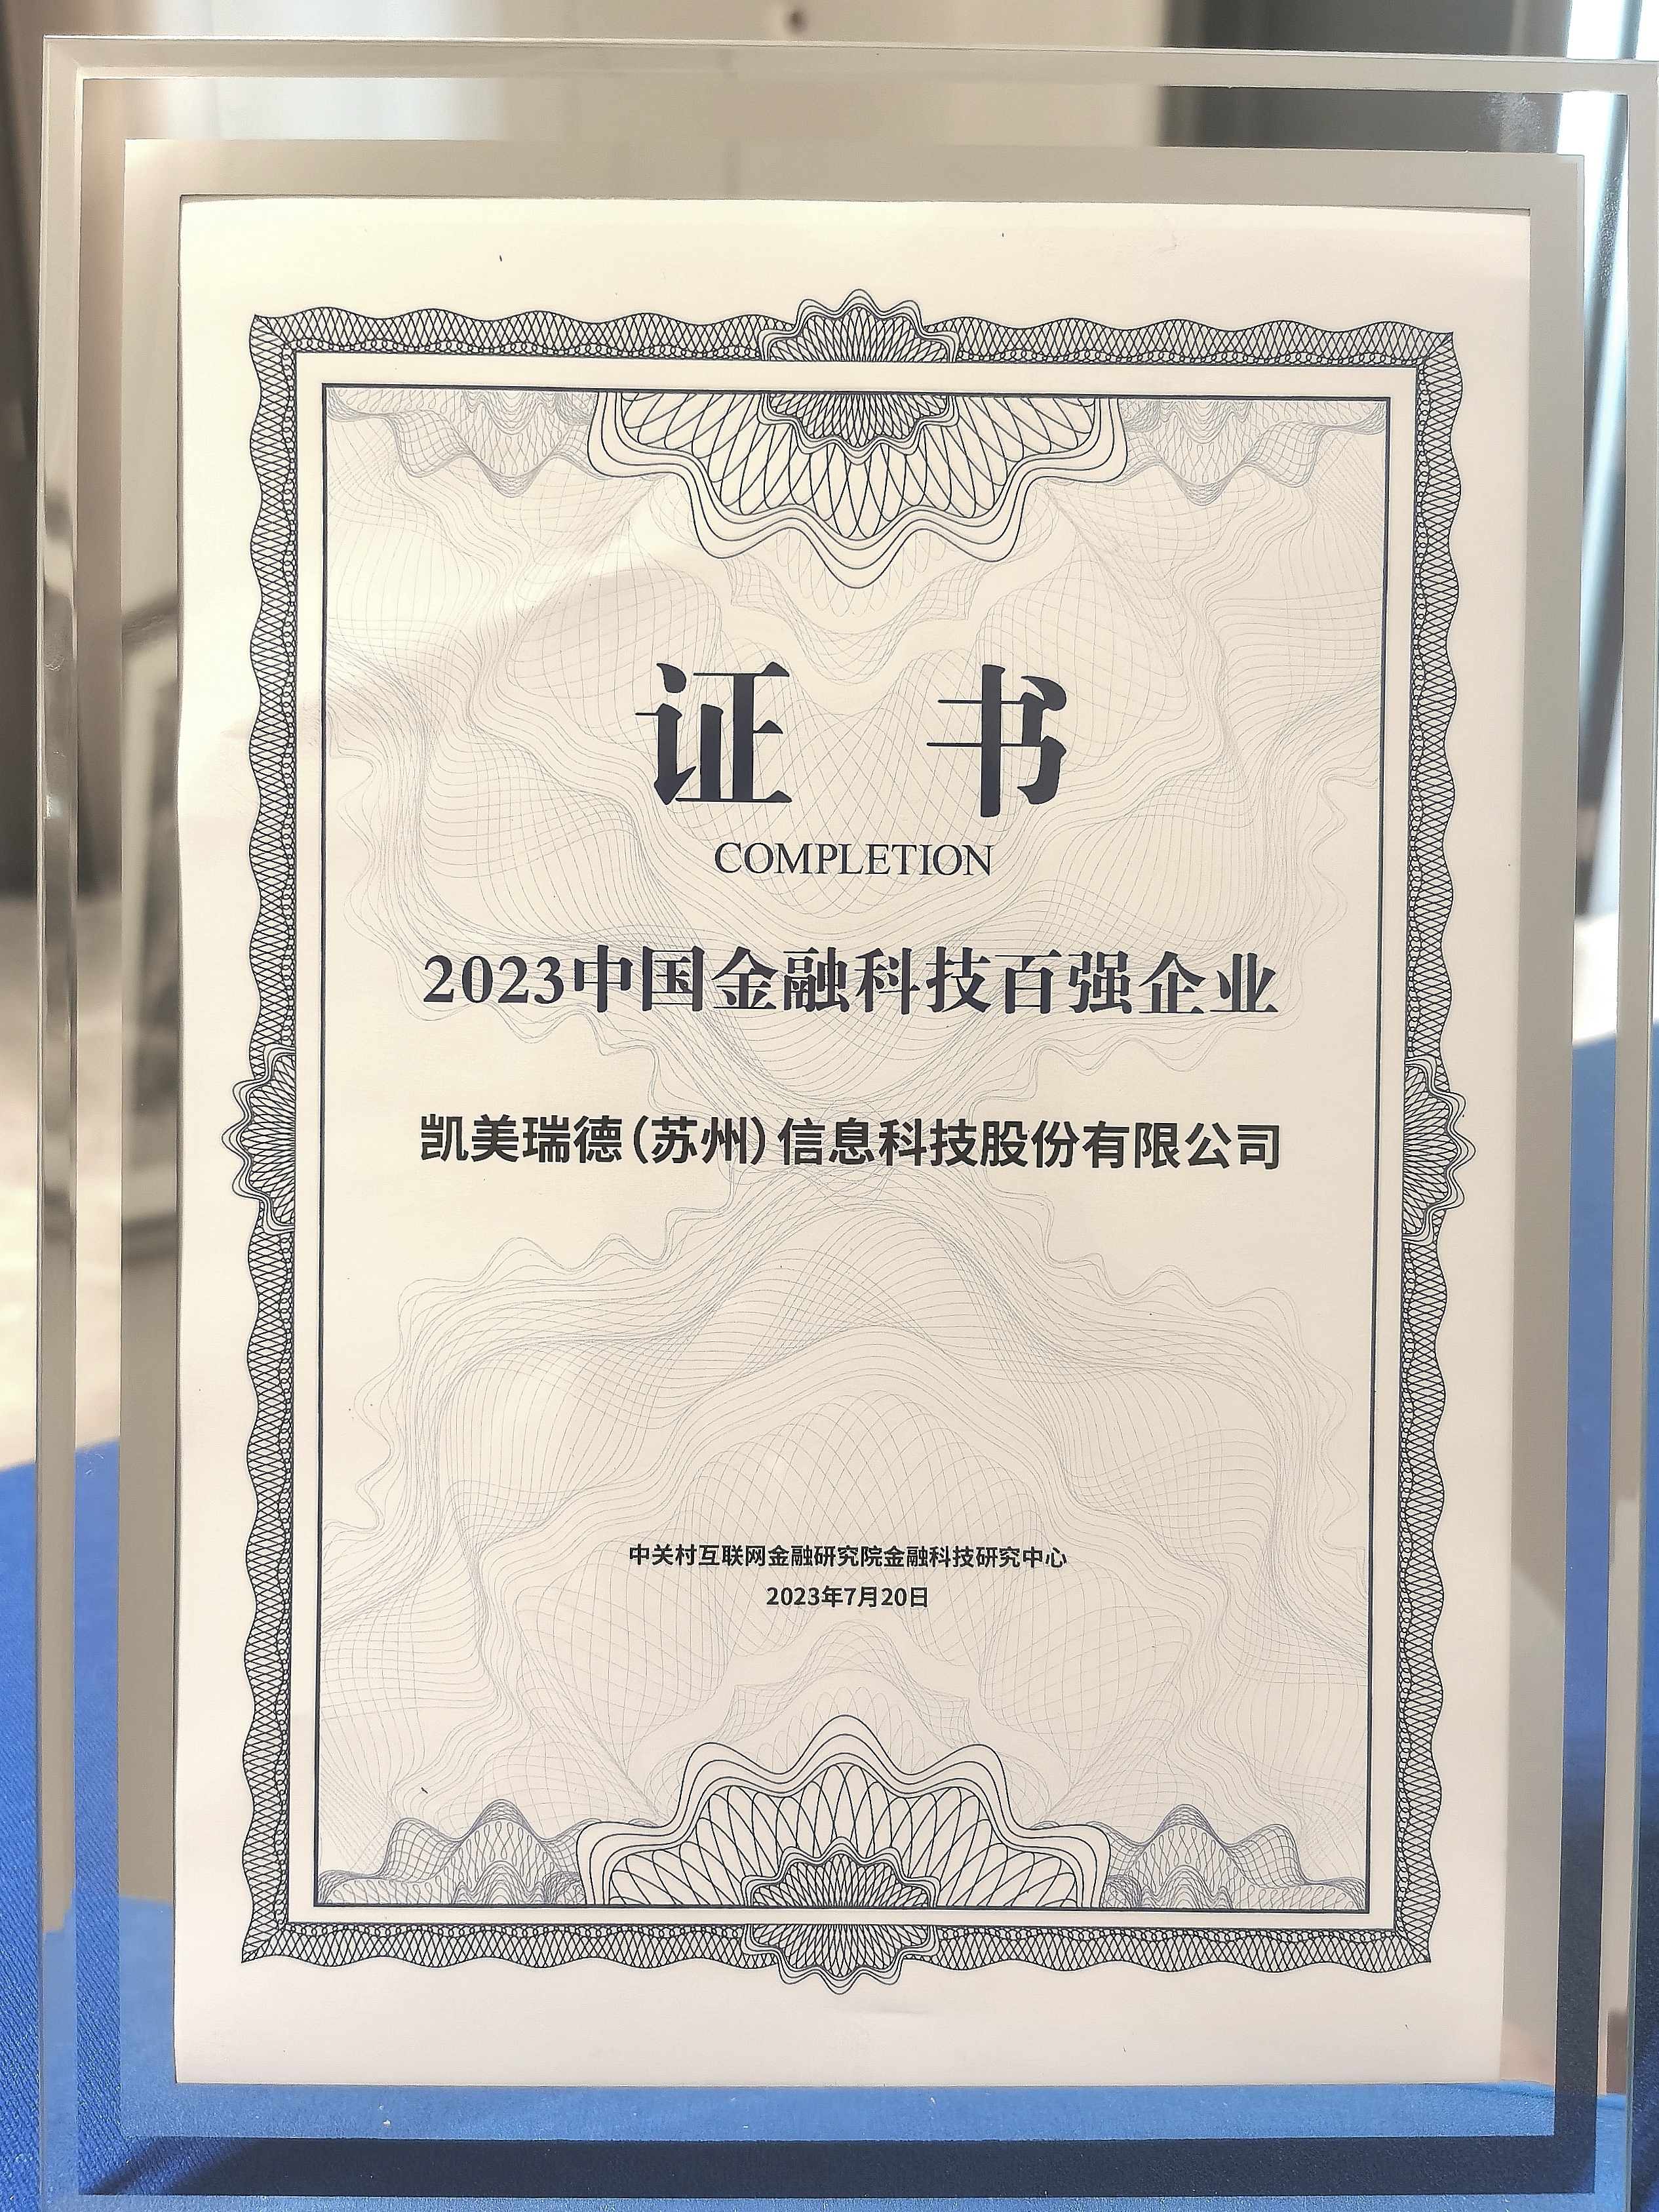 KMERIT Awarded "China's Top 100 FinTech Competitive Enterprises in 2023"